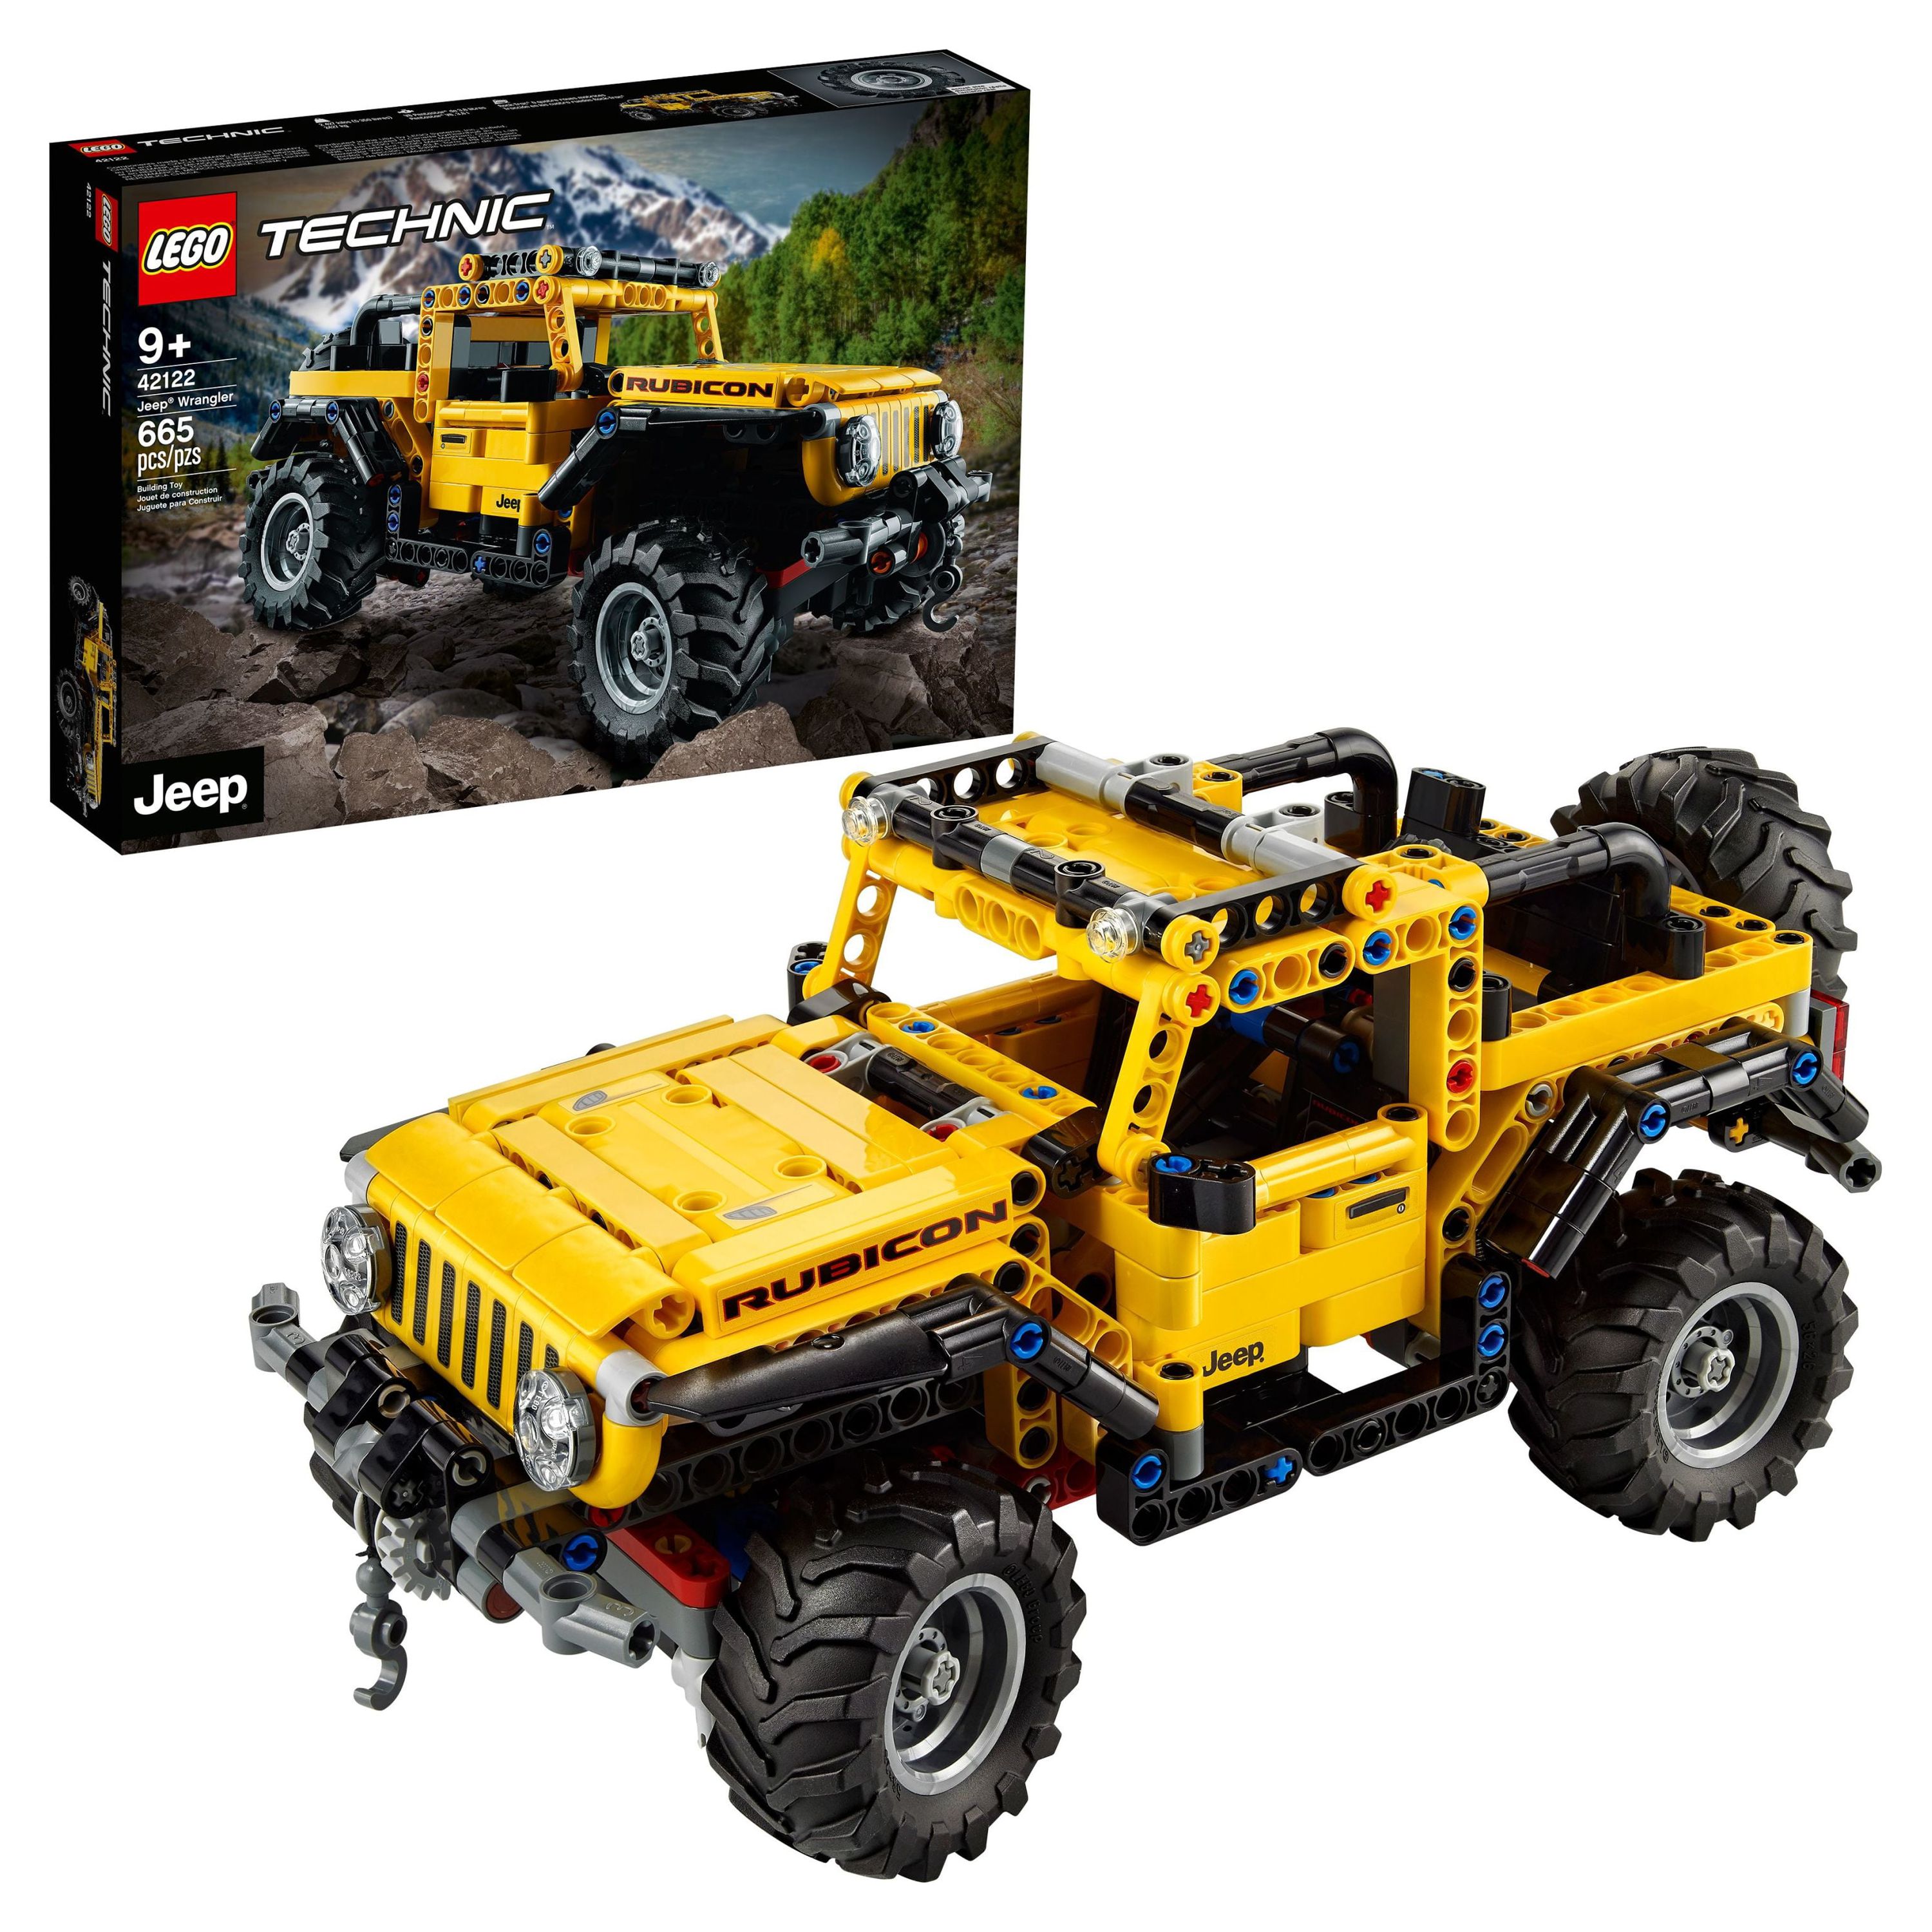 LEGO Technic Jeep® Wrangler 42122 - image 1 of 6